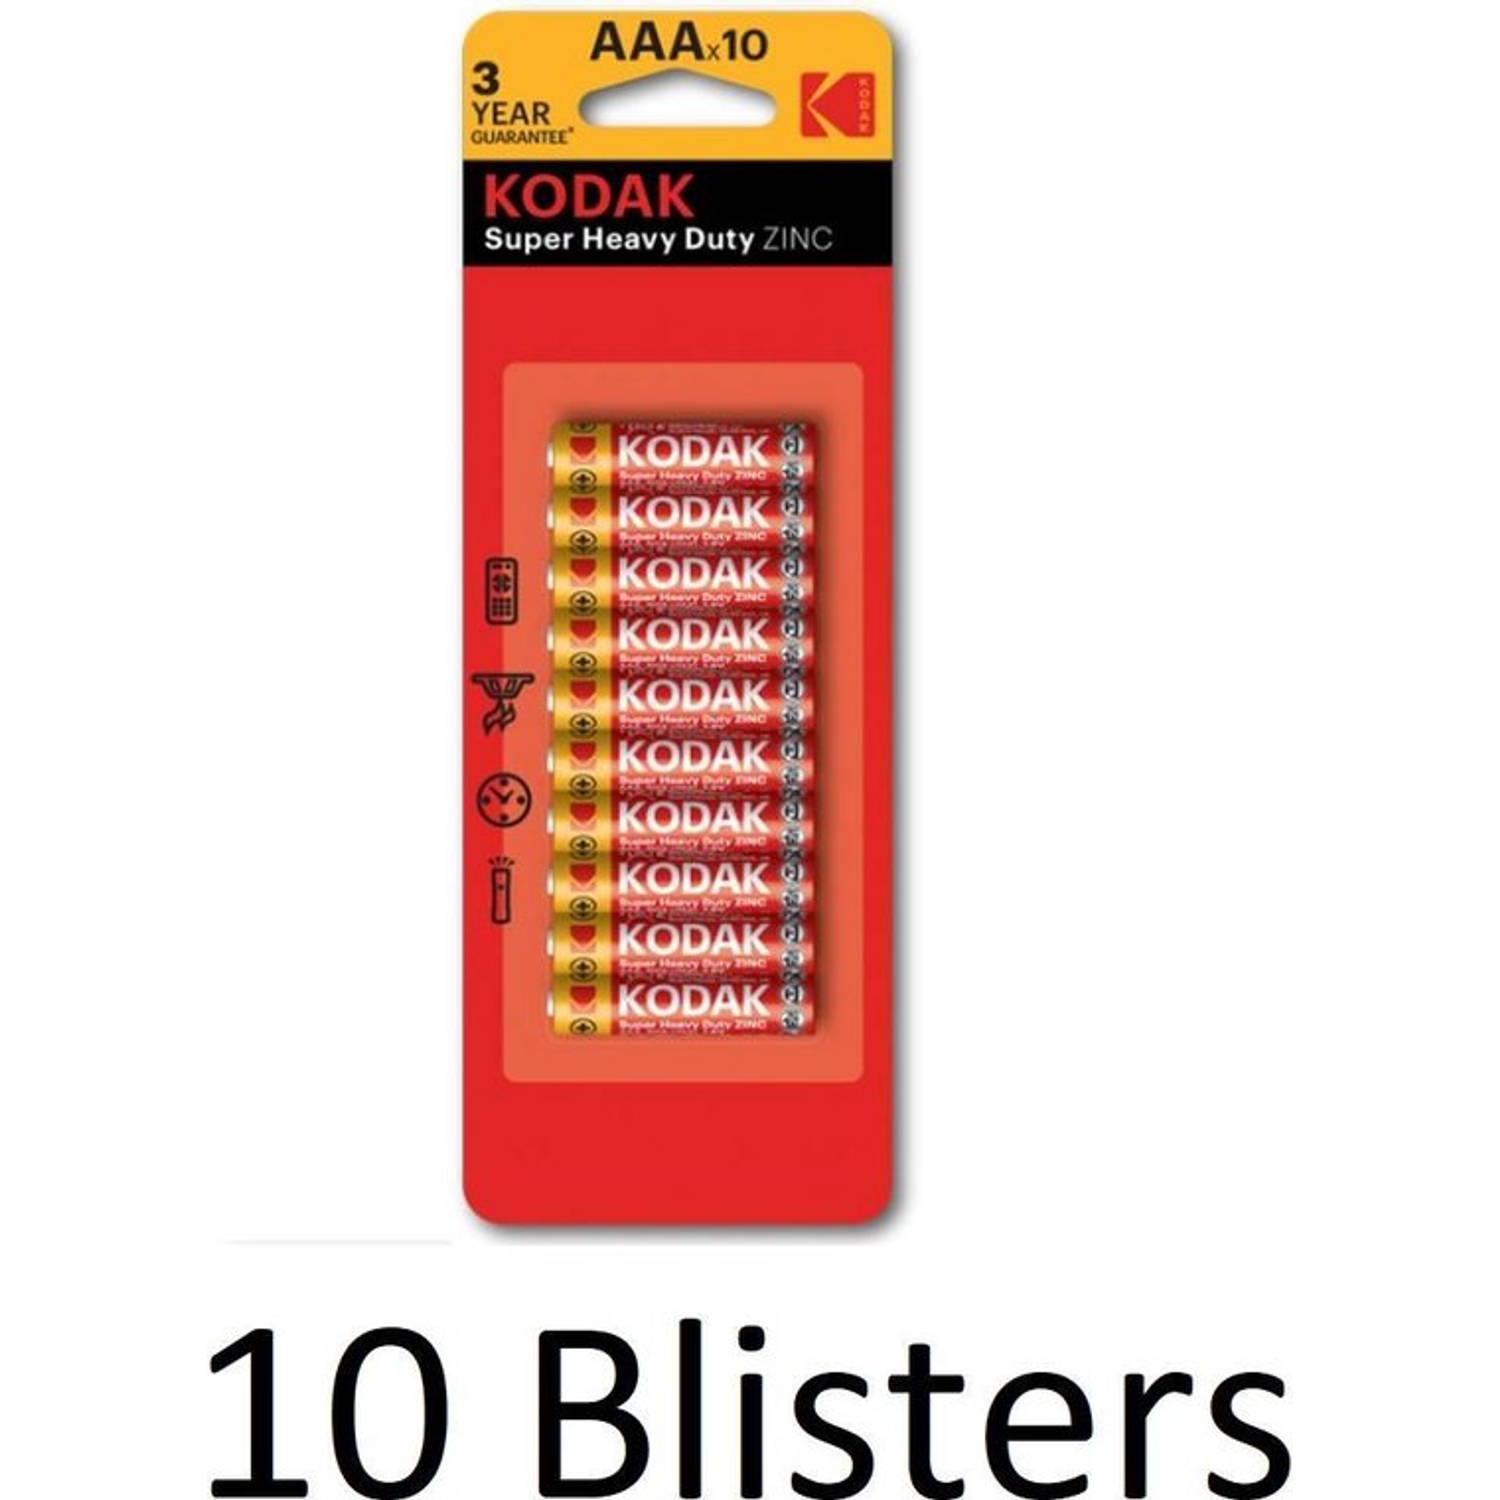 100 Stuks(10 Blisters a 10 st) Kodak ZINC super heavy duty AAA